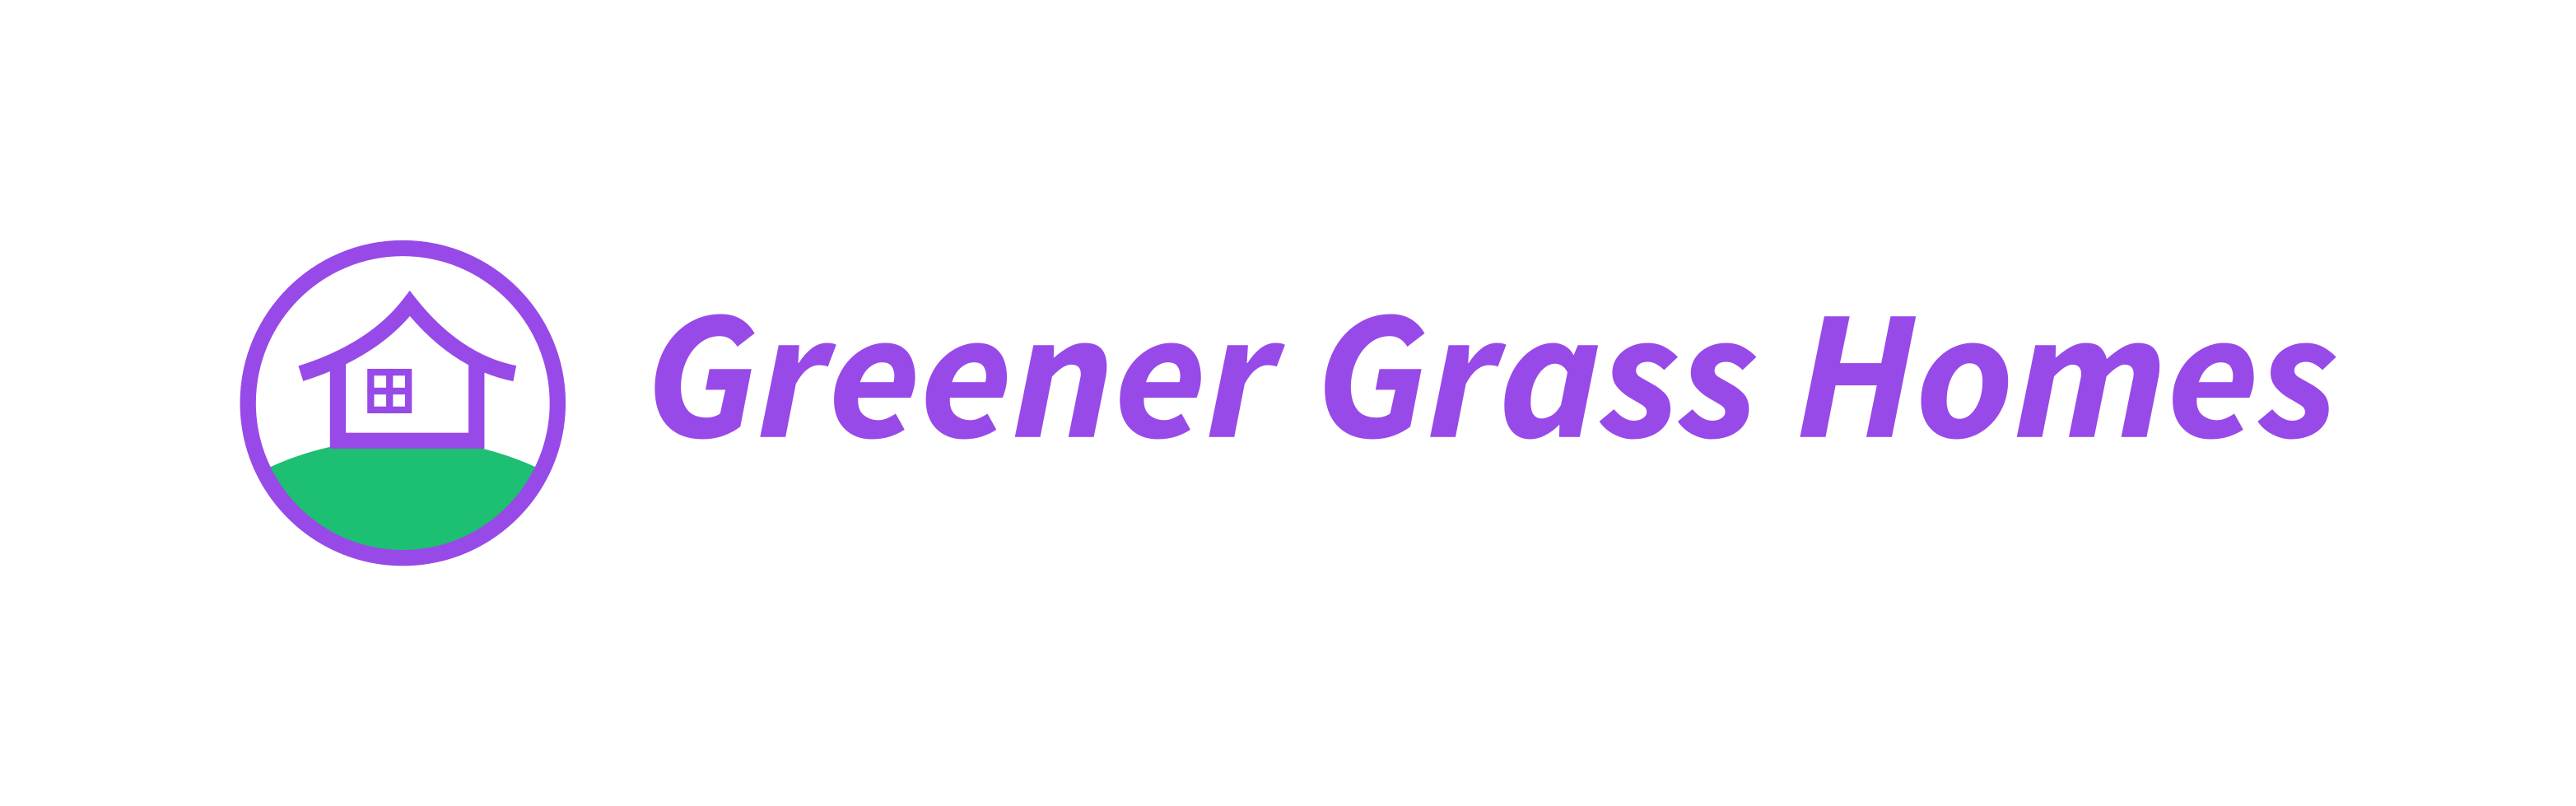 Greener Grass Homes -